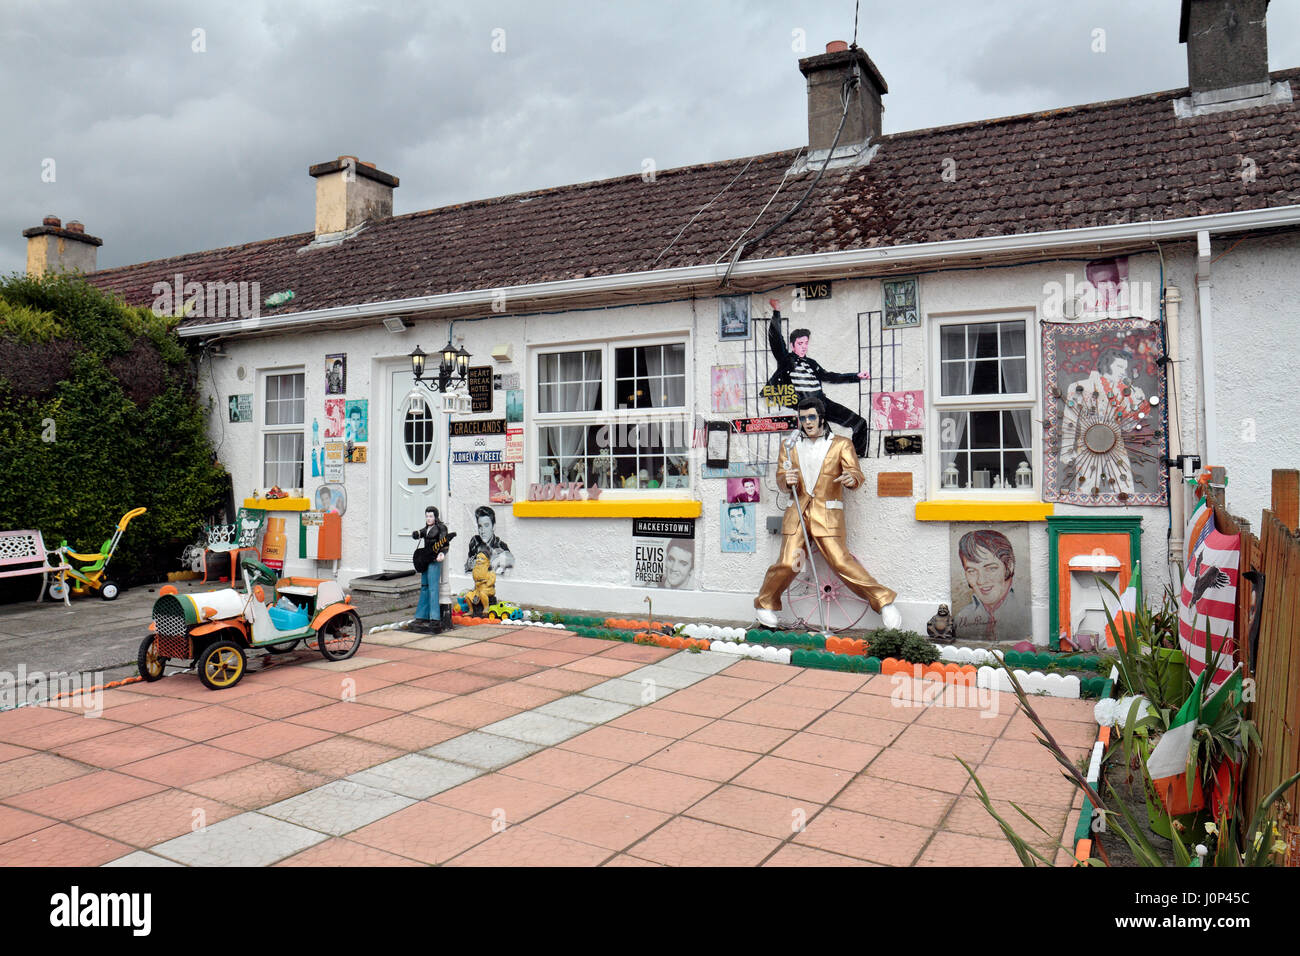 The Elvis house in the city of Kilkenny, County Kilkenny, Ireland, (Eire). Stock Photo